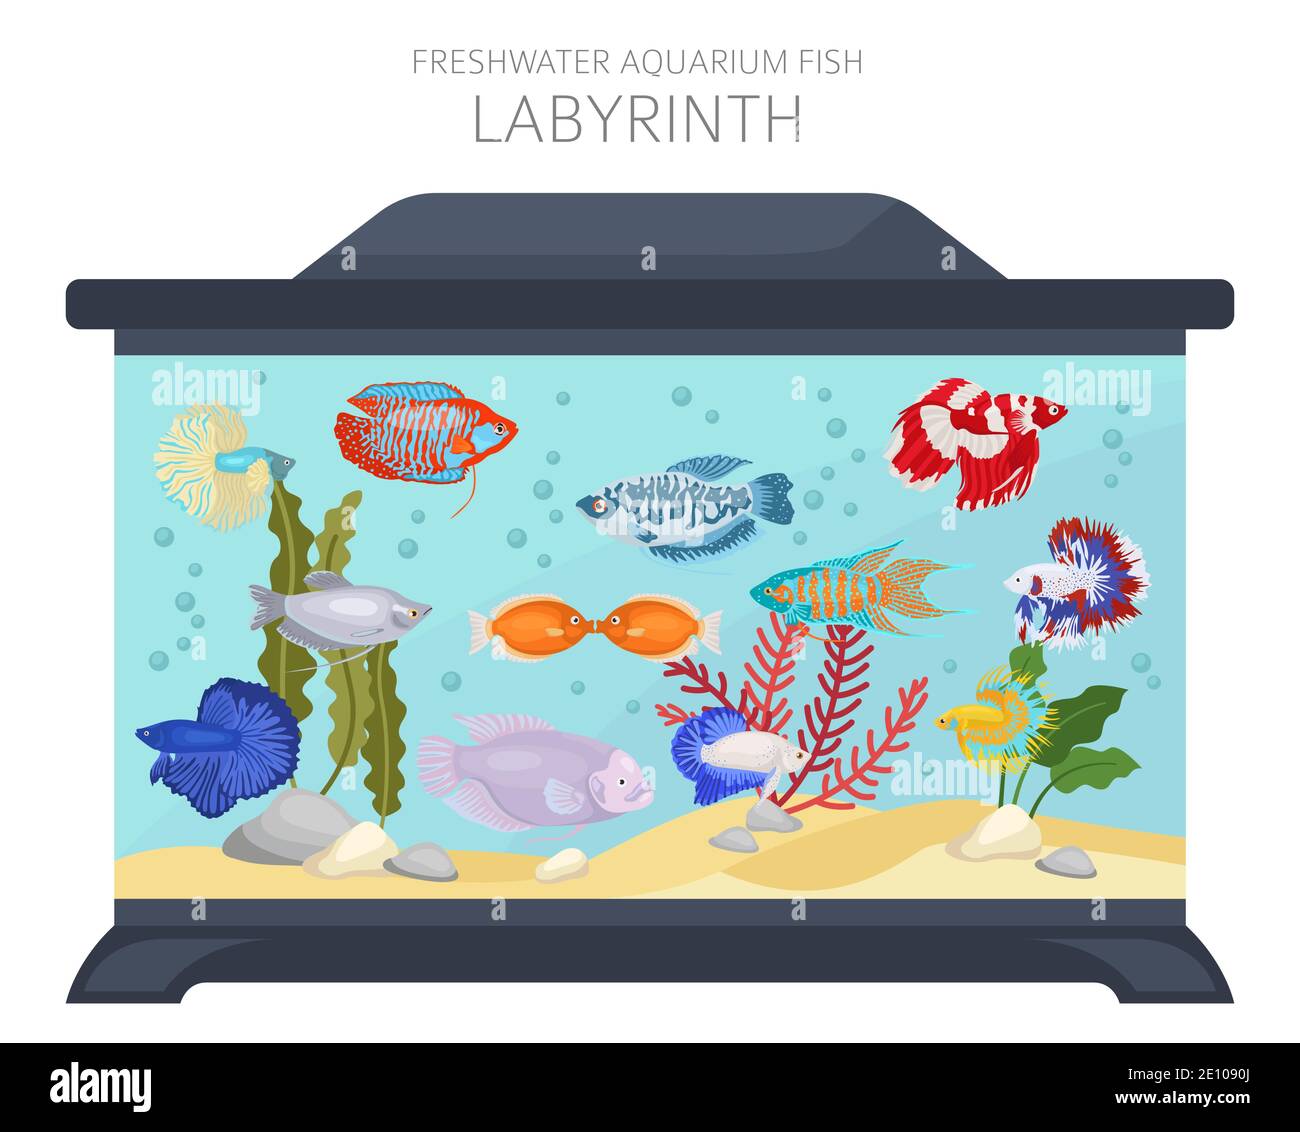 Labyrinth fish. Freshwater aquarium fish icon set flat style isolated on white.  Vector illustration Stock Vector